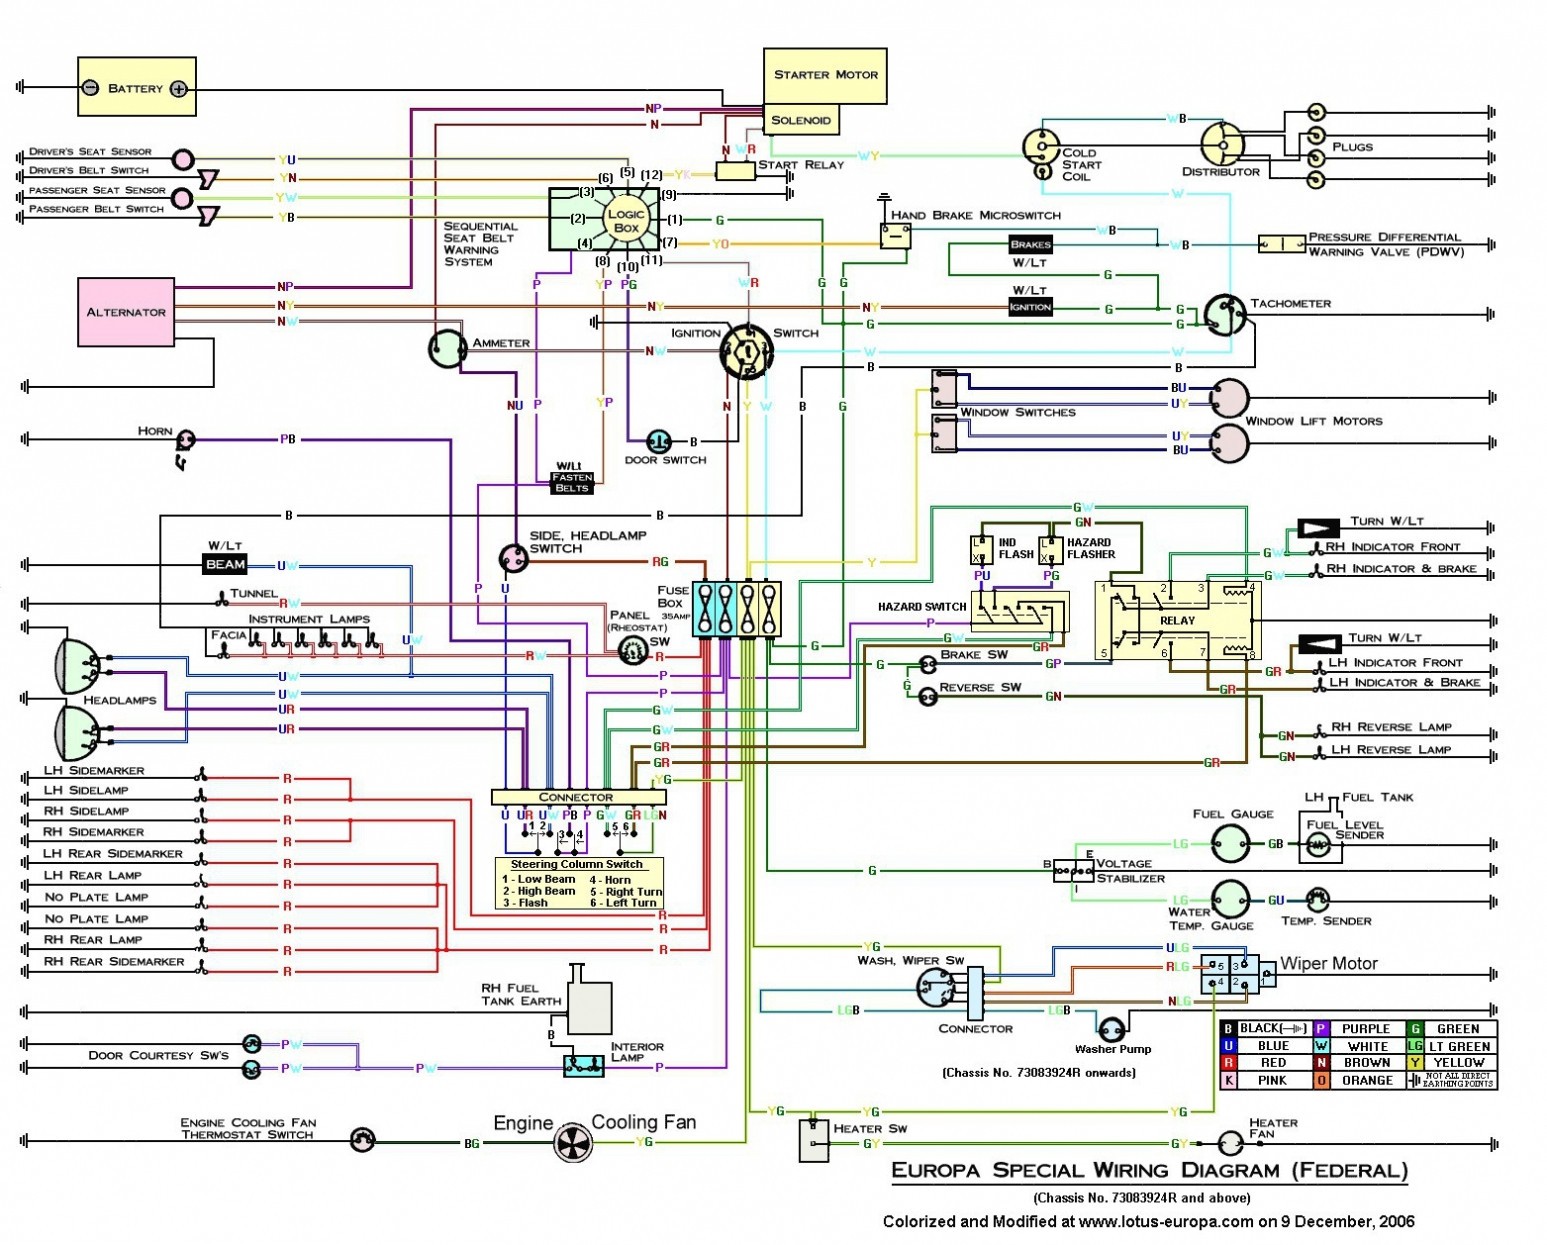 Car Audio Wiring Diagrams New Car Radio Wiring Diagram – Http Wikidiyfaqorguk 0 0d Splanwiring